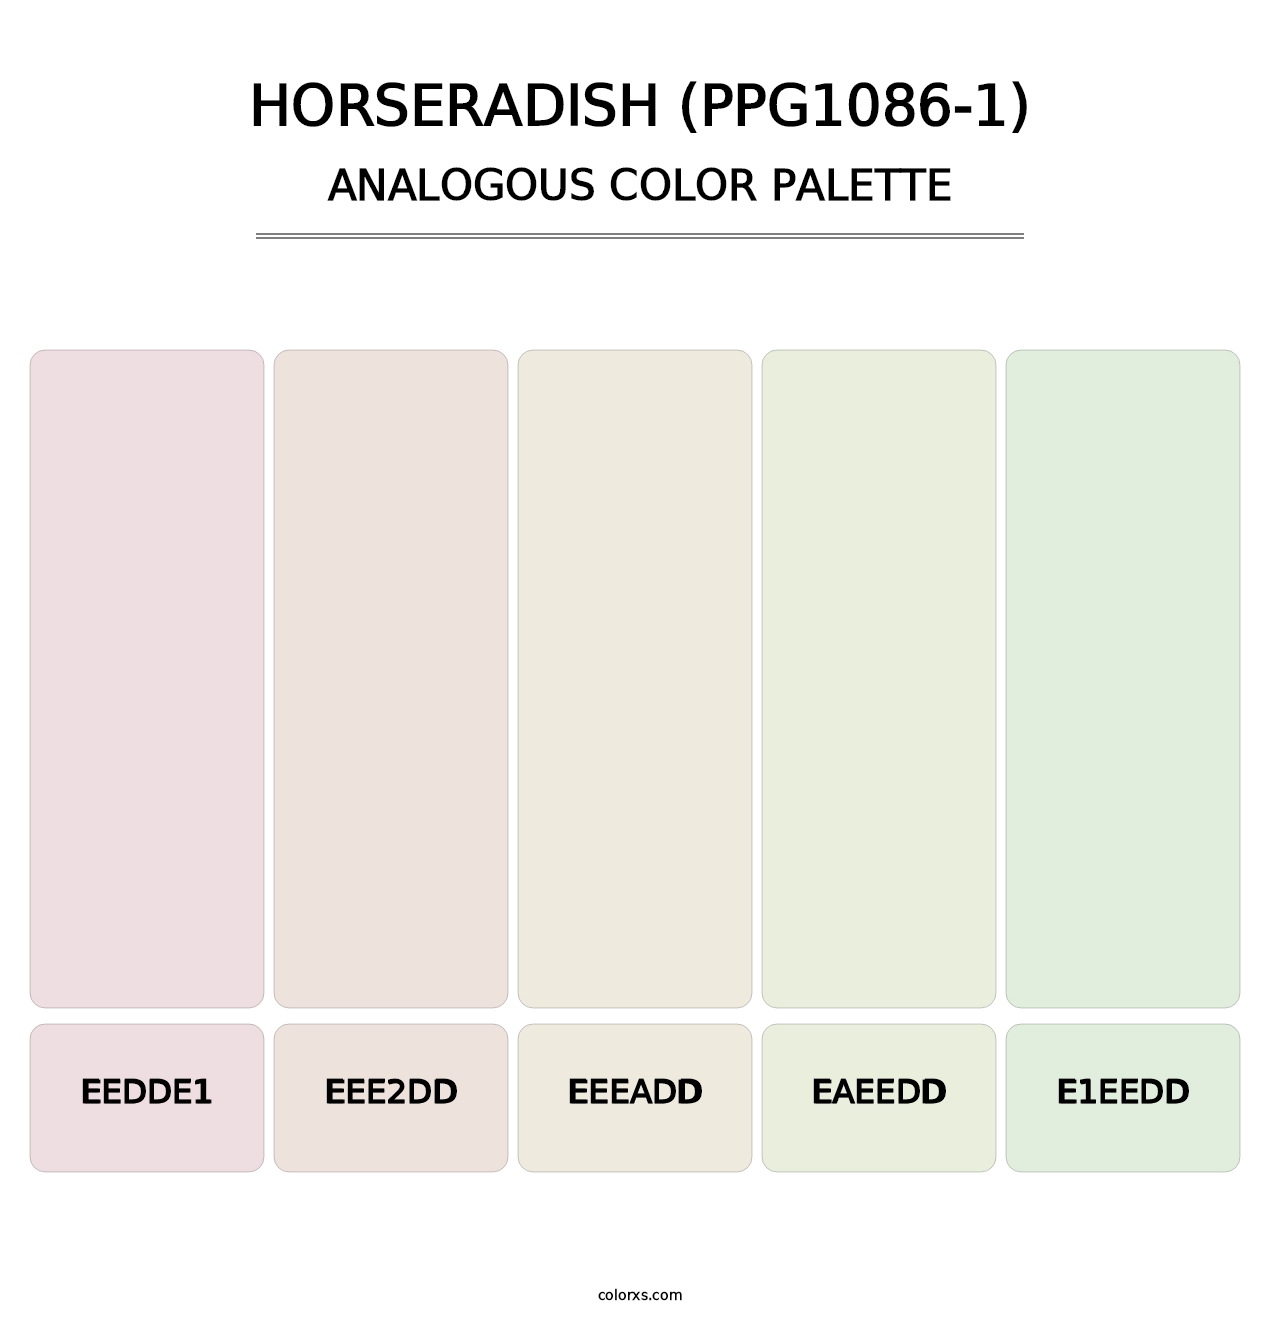 Horseradish (PPG1086-1) - Analogous Color Palette